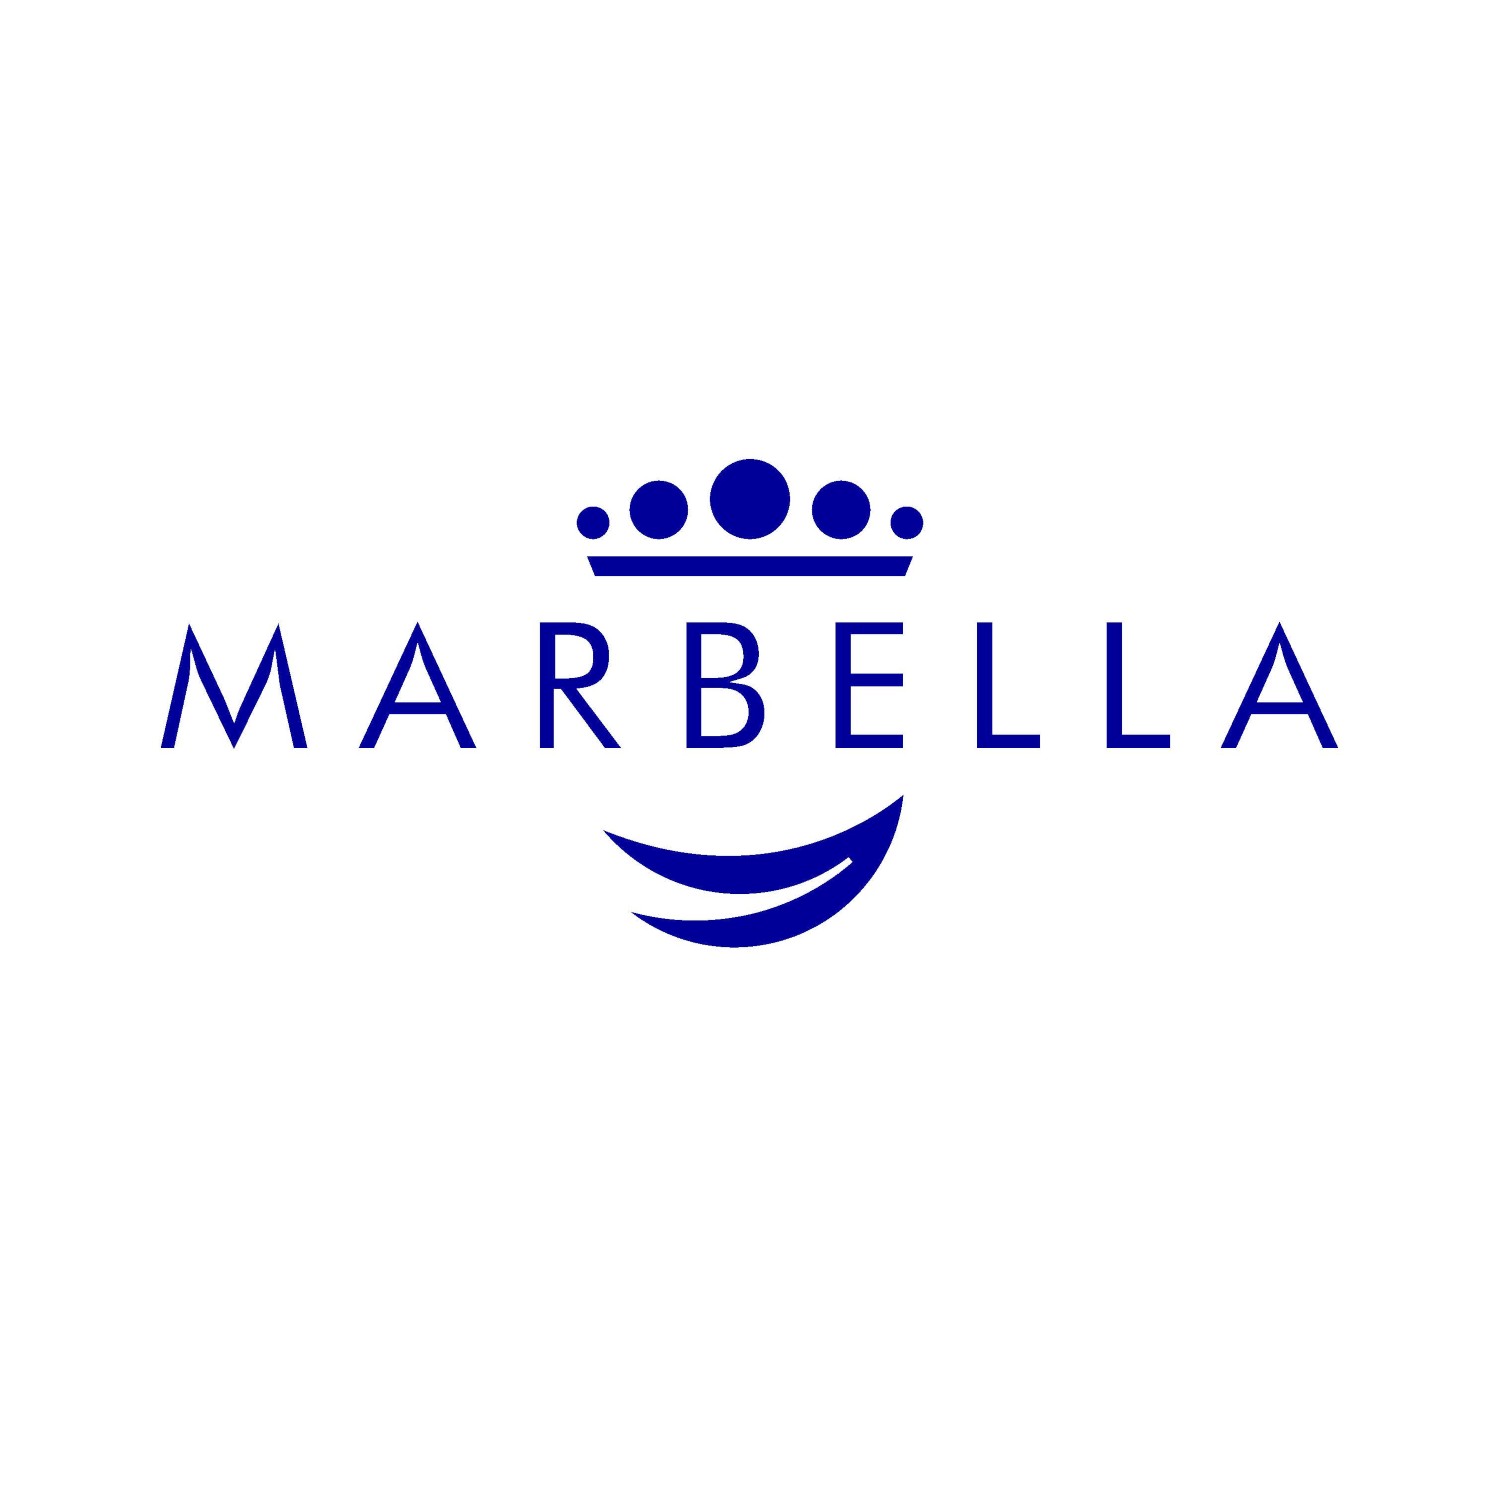 Etiqueta: Marbella